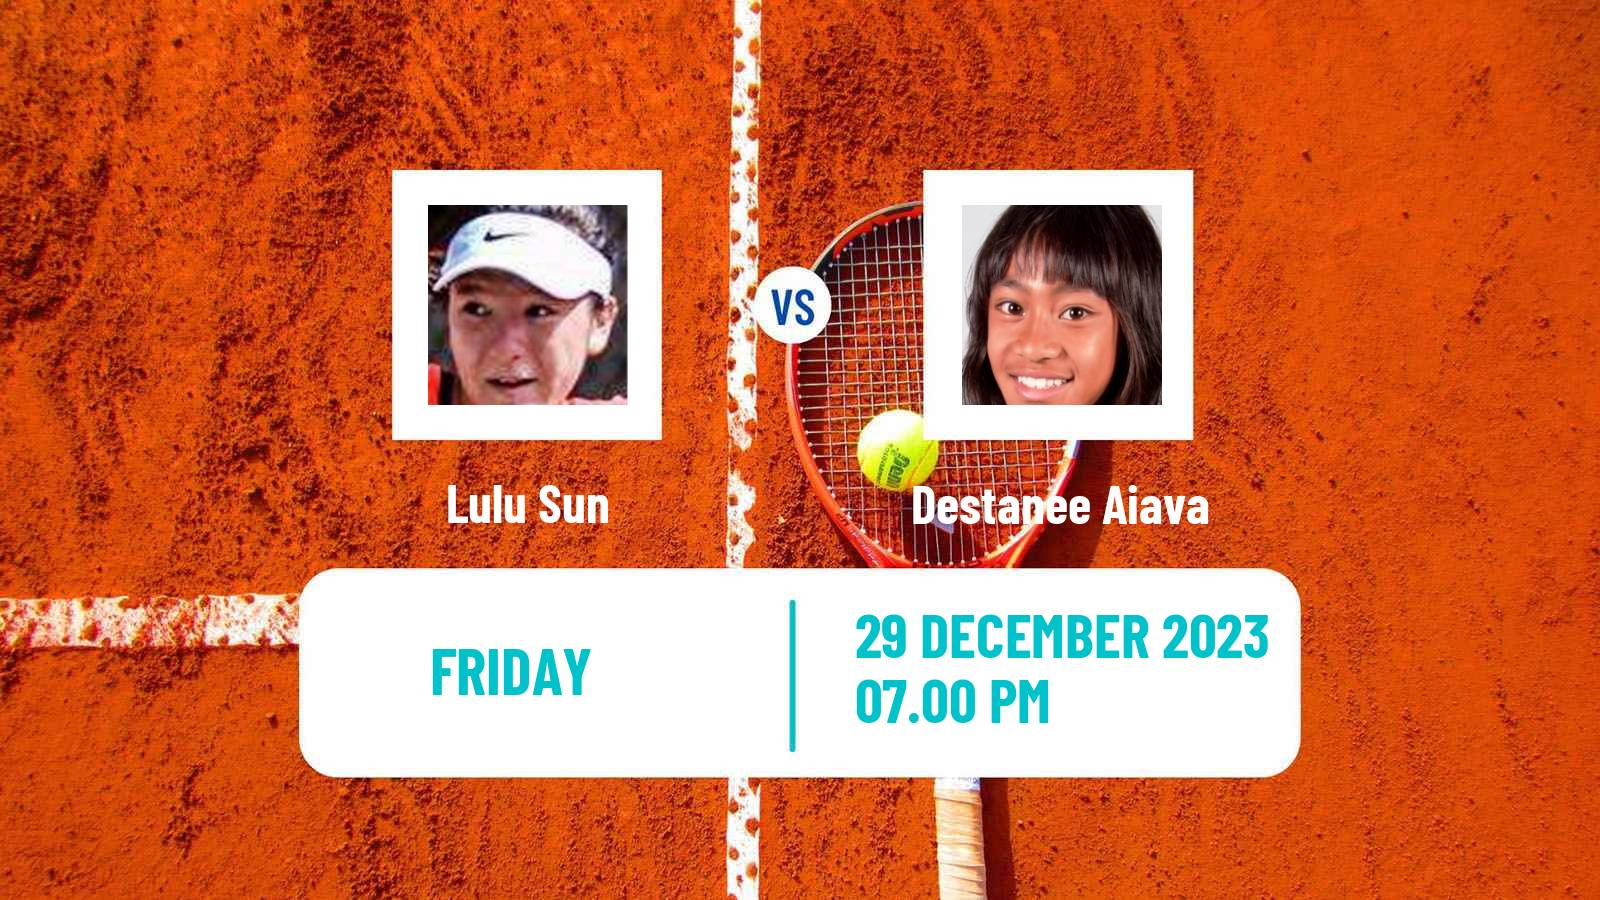 Tennis WTA Auckland Lulu Sun - Destanee Aiava